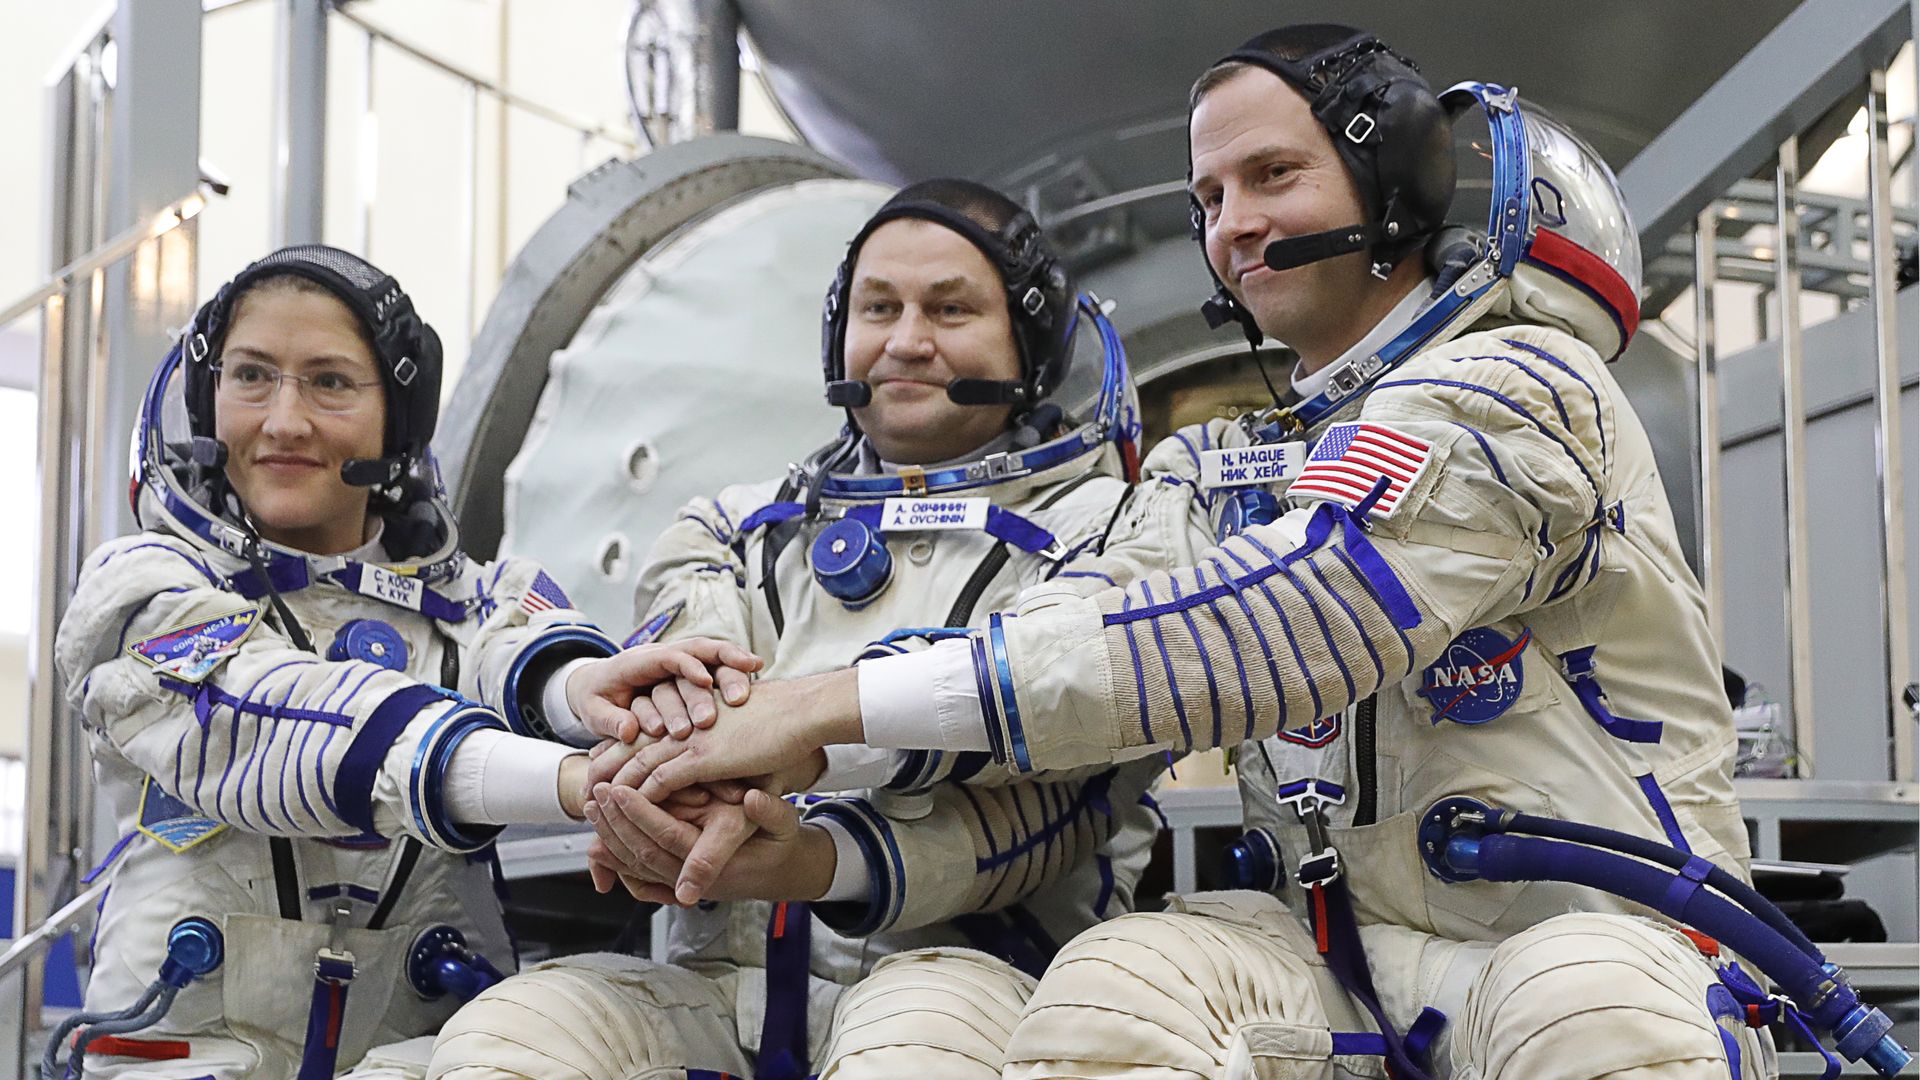 Three astronauts preparing for a mission